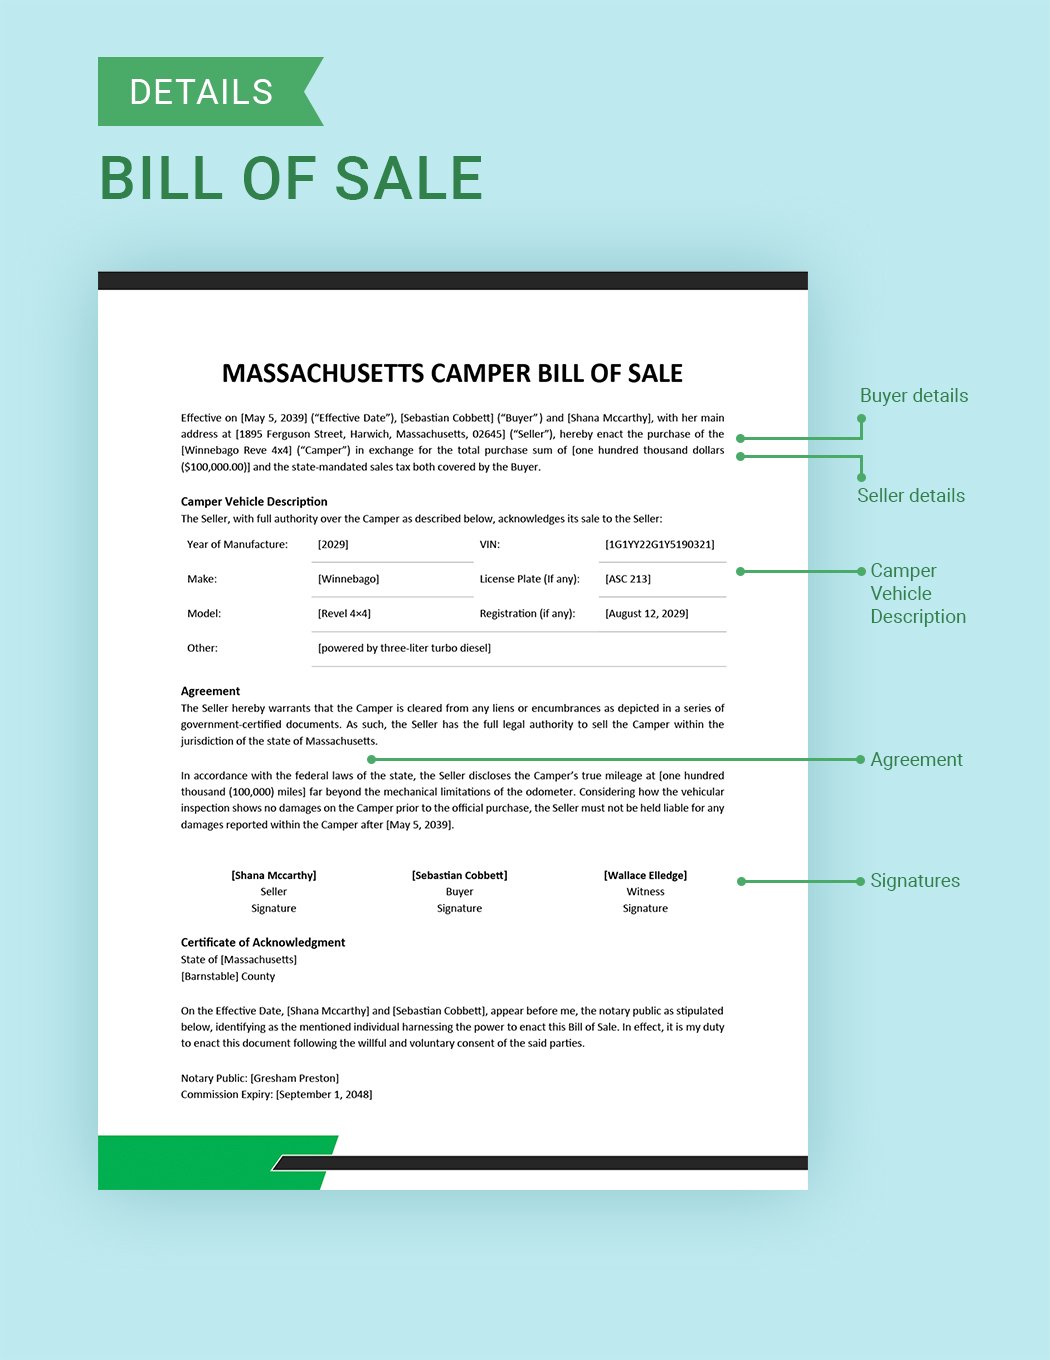 Massachusetts Camper Bill of Sale Template